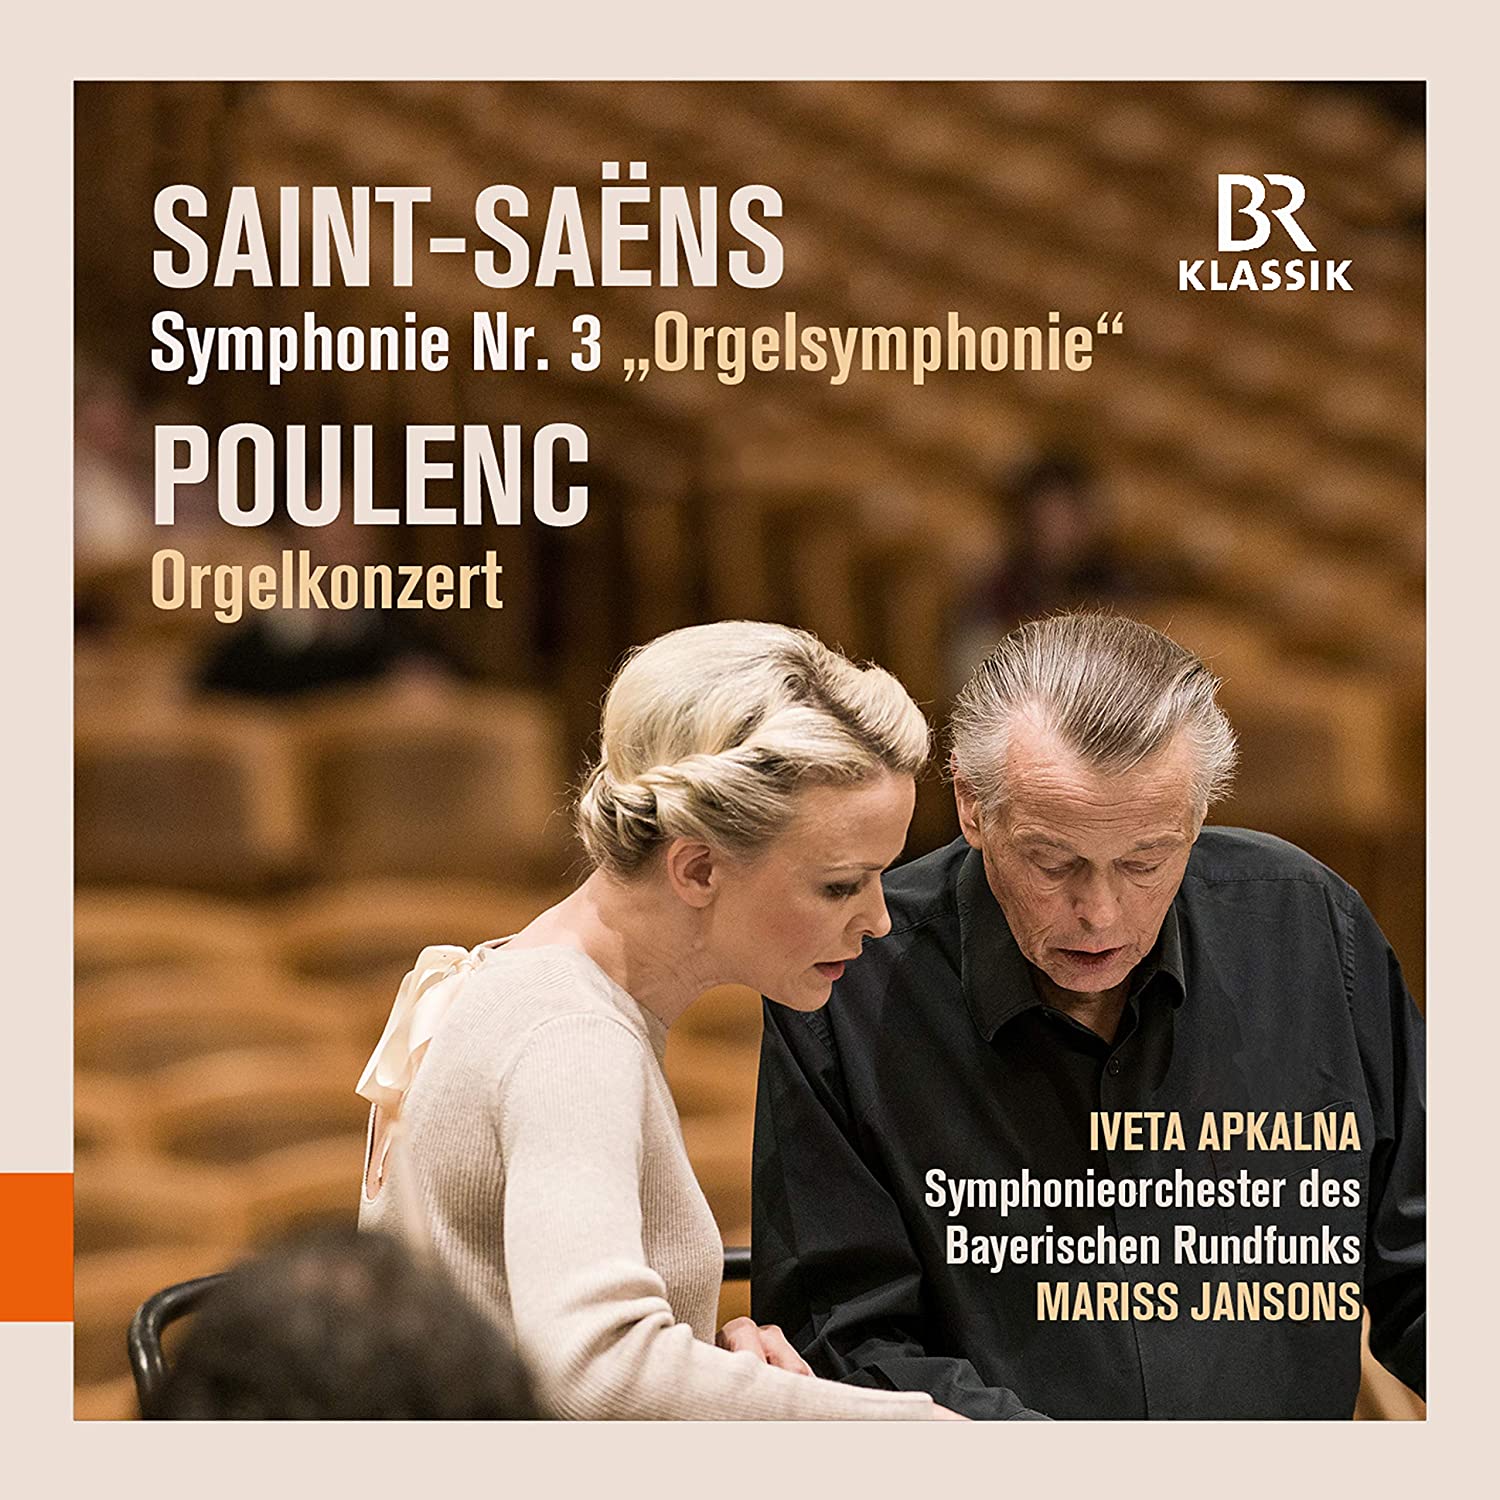 Saint-Saens: Symphony No. 3 / Poulenc: Orgelkonzert | Iveta Apkalna, Symphonieorchester des Bayerischen Rundfunks, Mariss Jansons